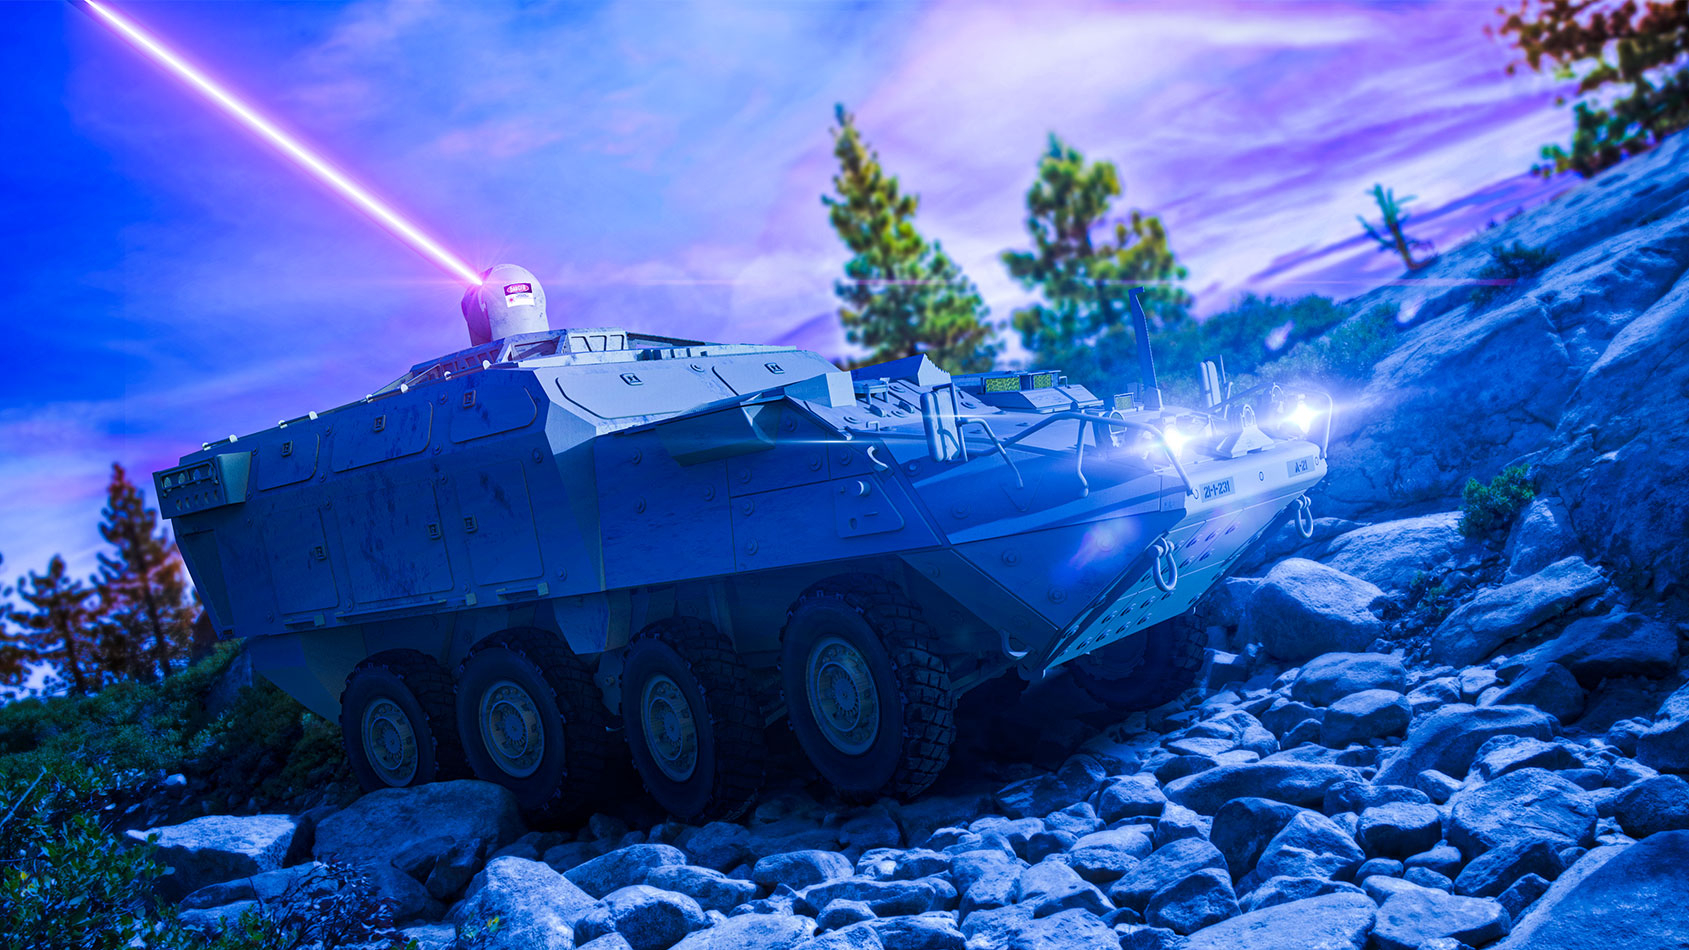 Stryker combat vehicle firing DEIMOS laser weapon system